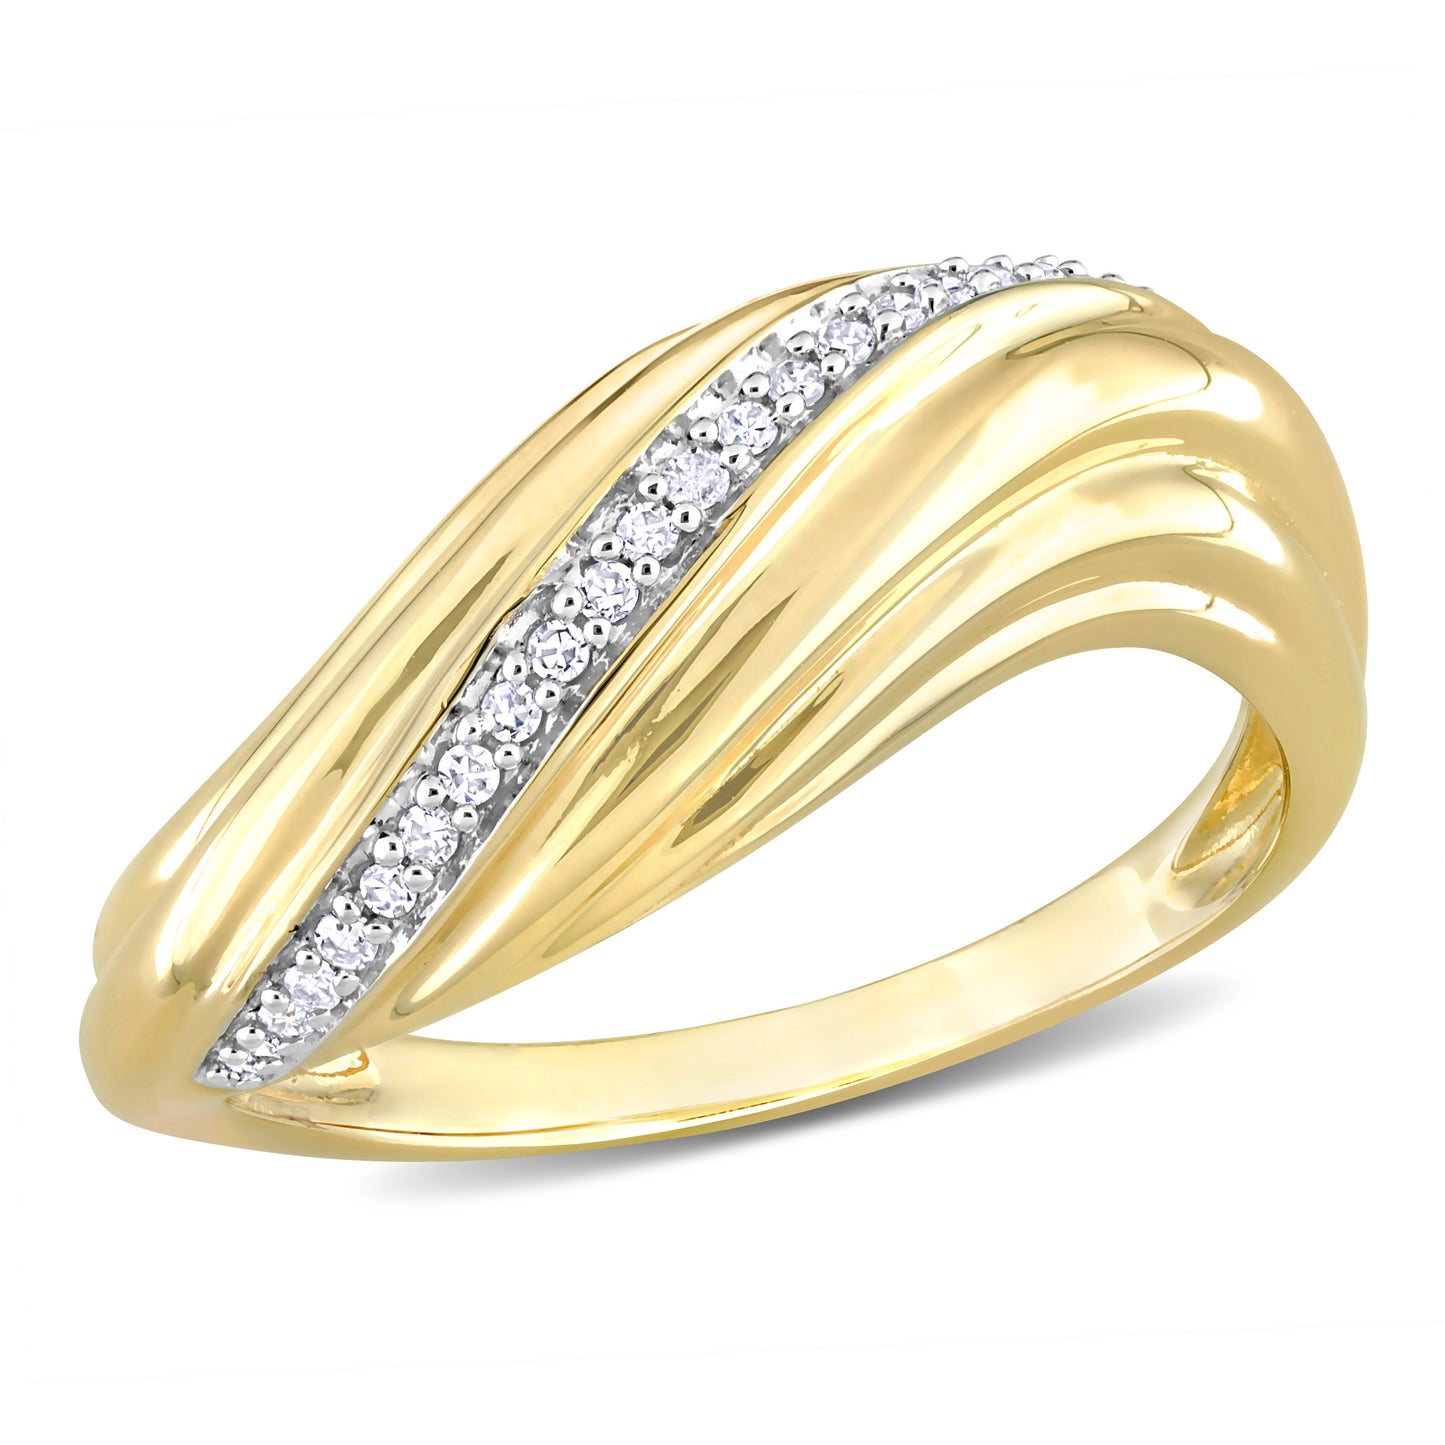 Swirl Diamond Ring in 14k Yellow Gold